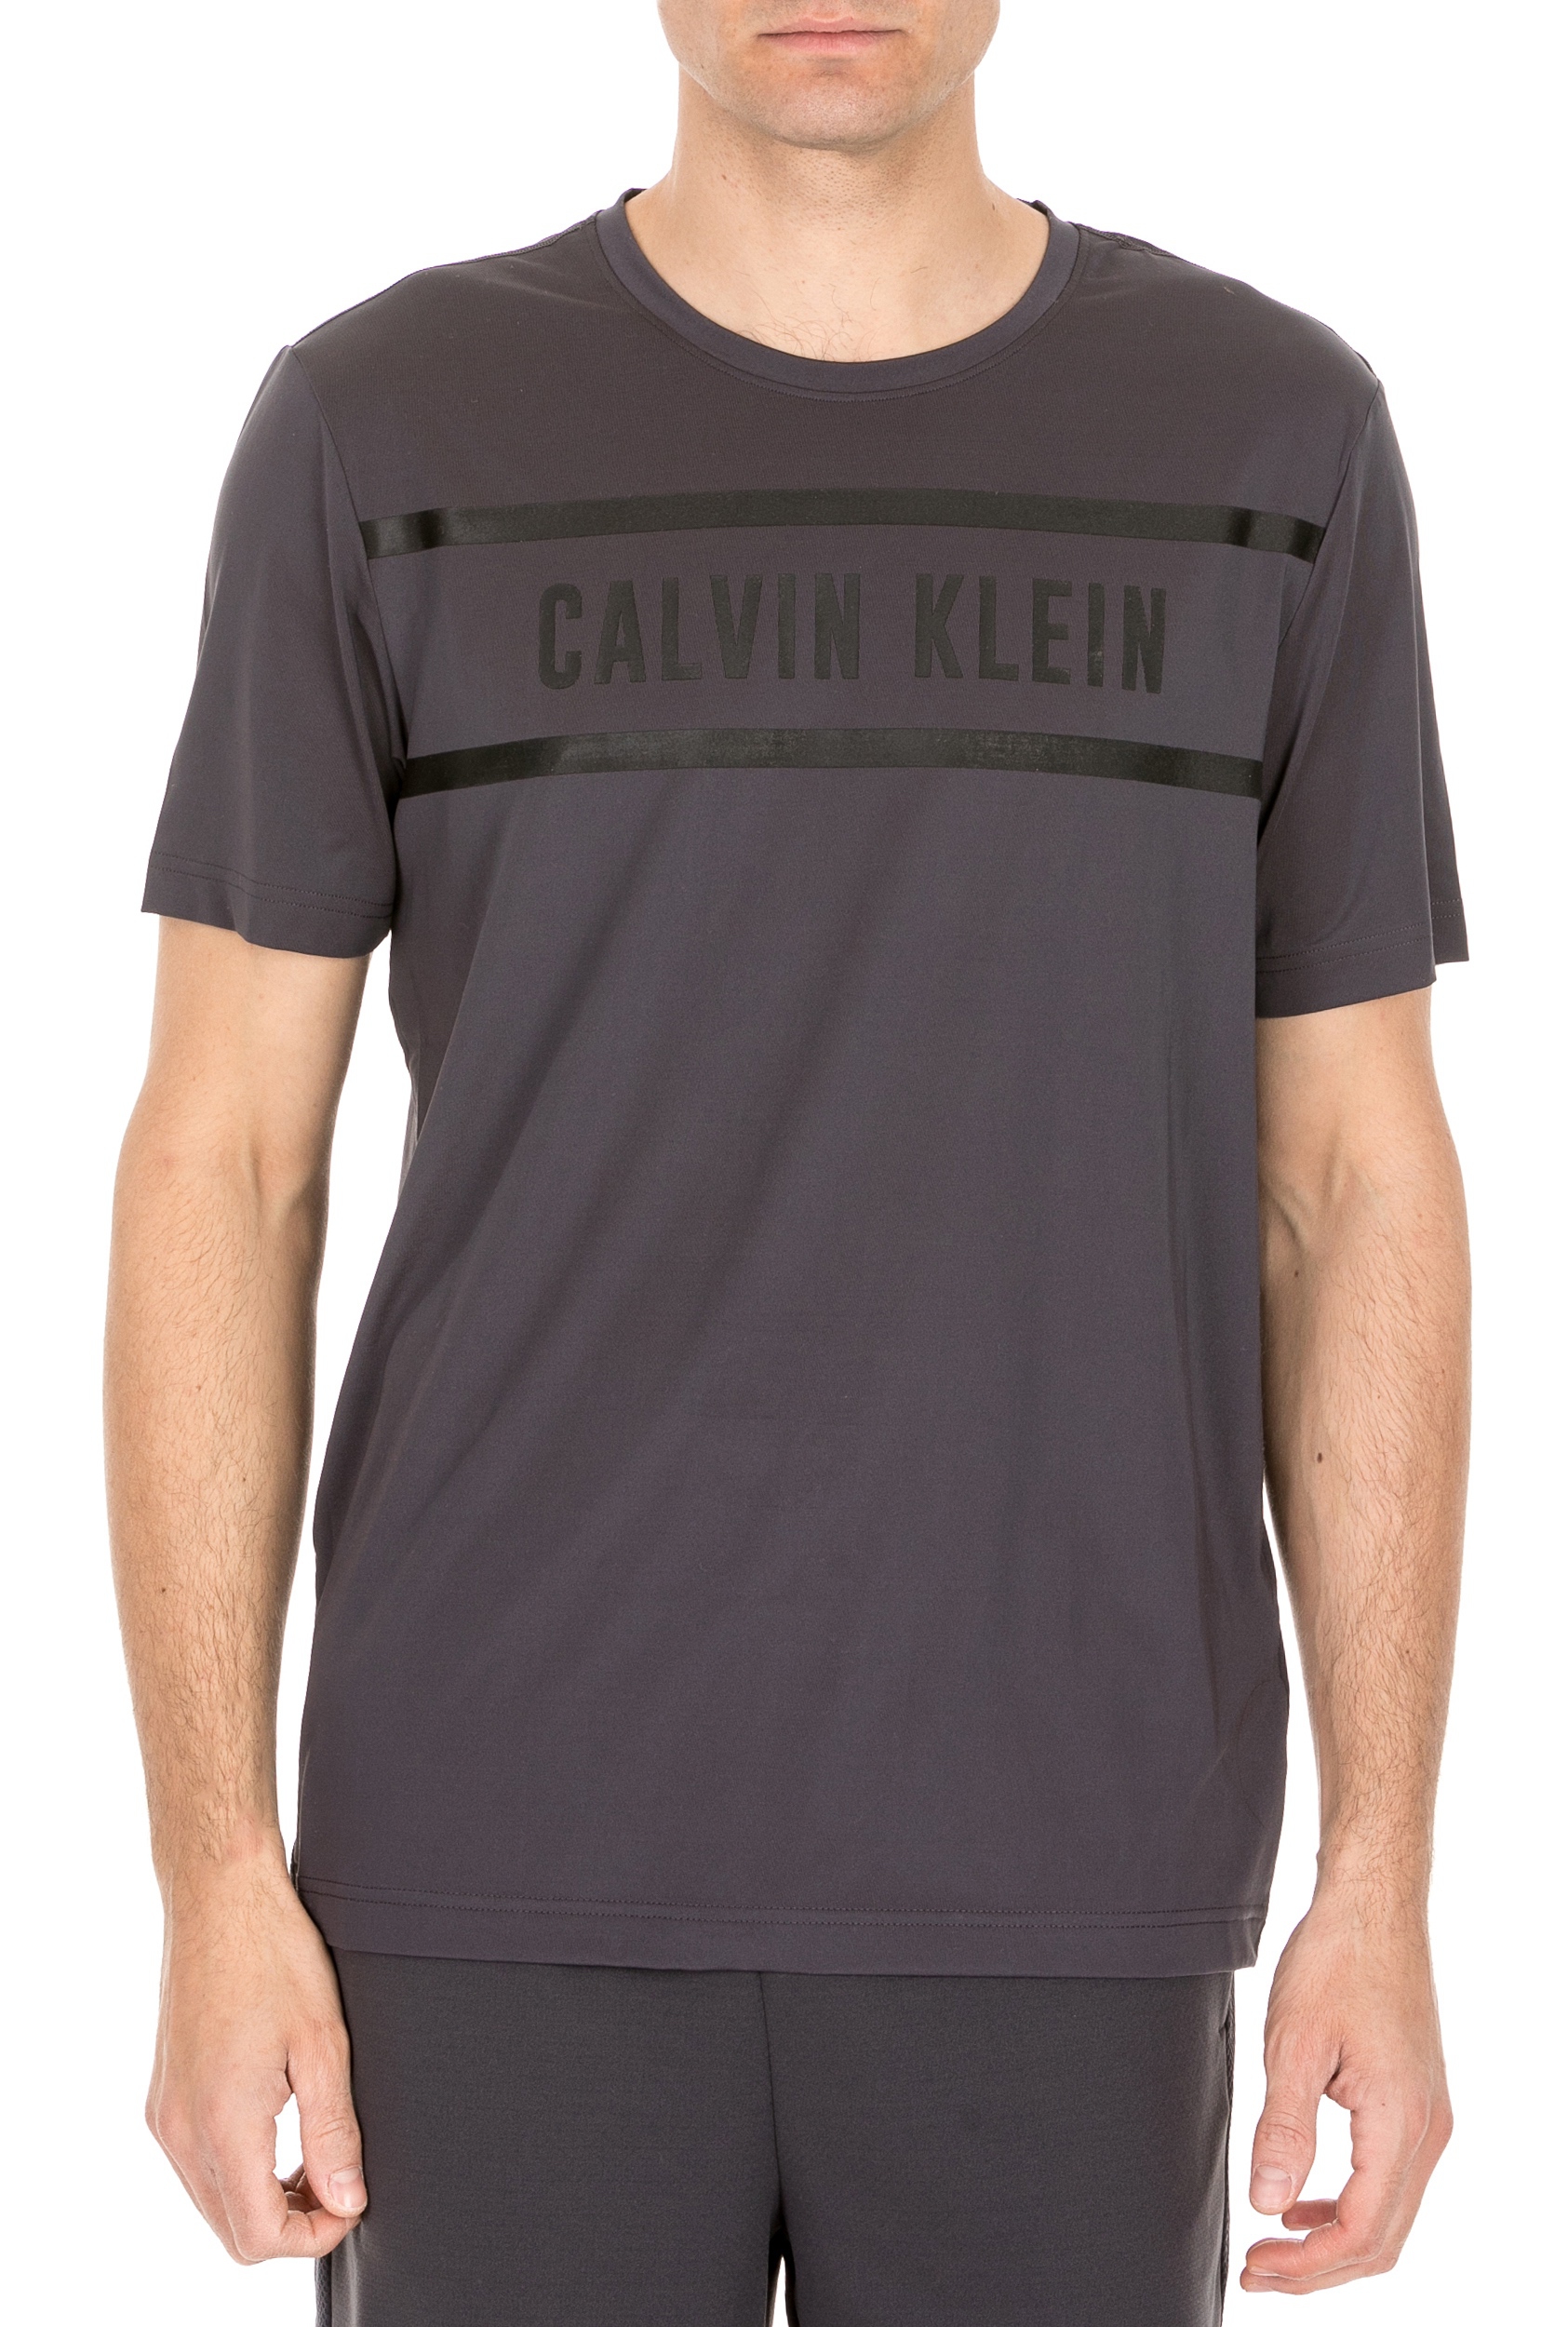 CK PERFORMANCE – Ανδρικό t-shirt CK PERFORMANCE LOGO ανθρακί 1700382.0-8073